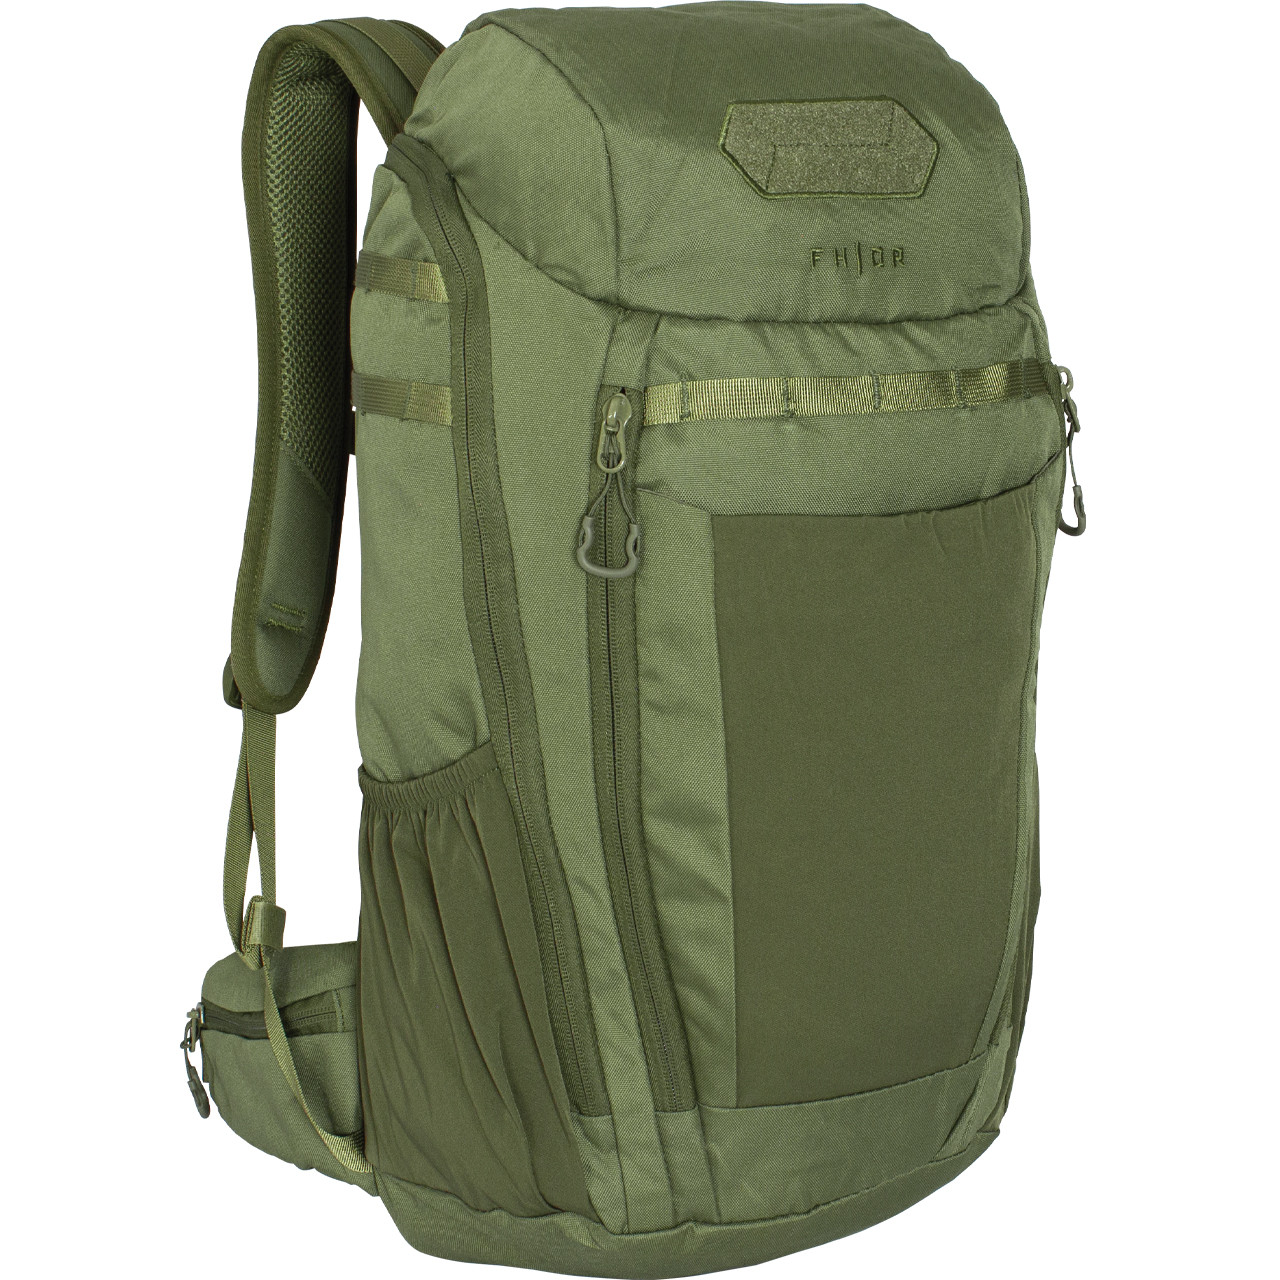 Fhior 30L Tactical Backpack - Olive Drab - Front Left